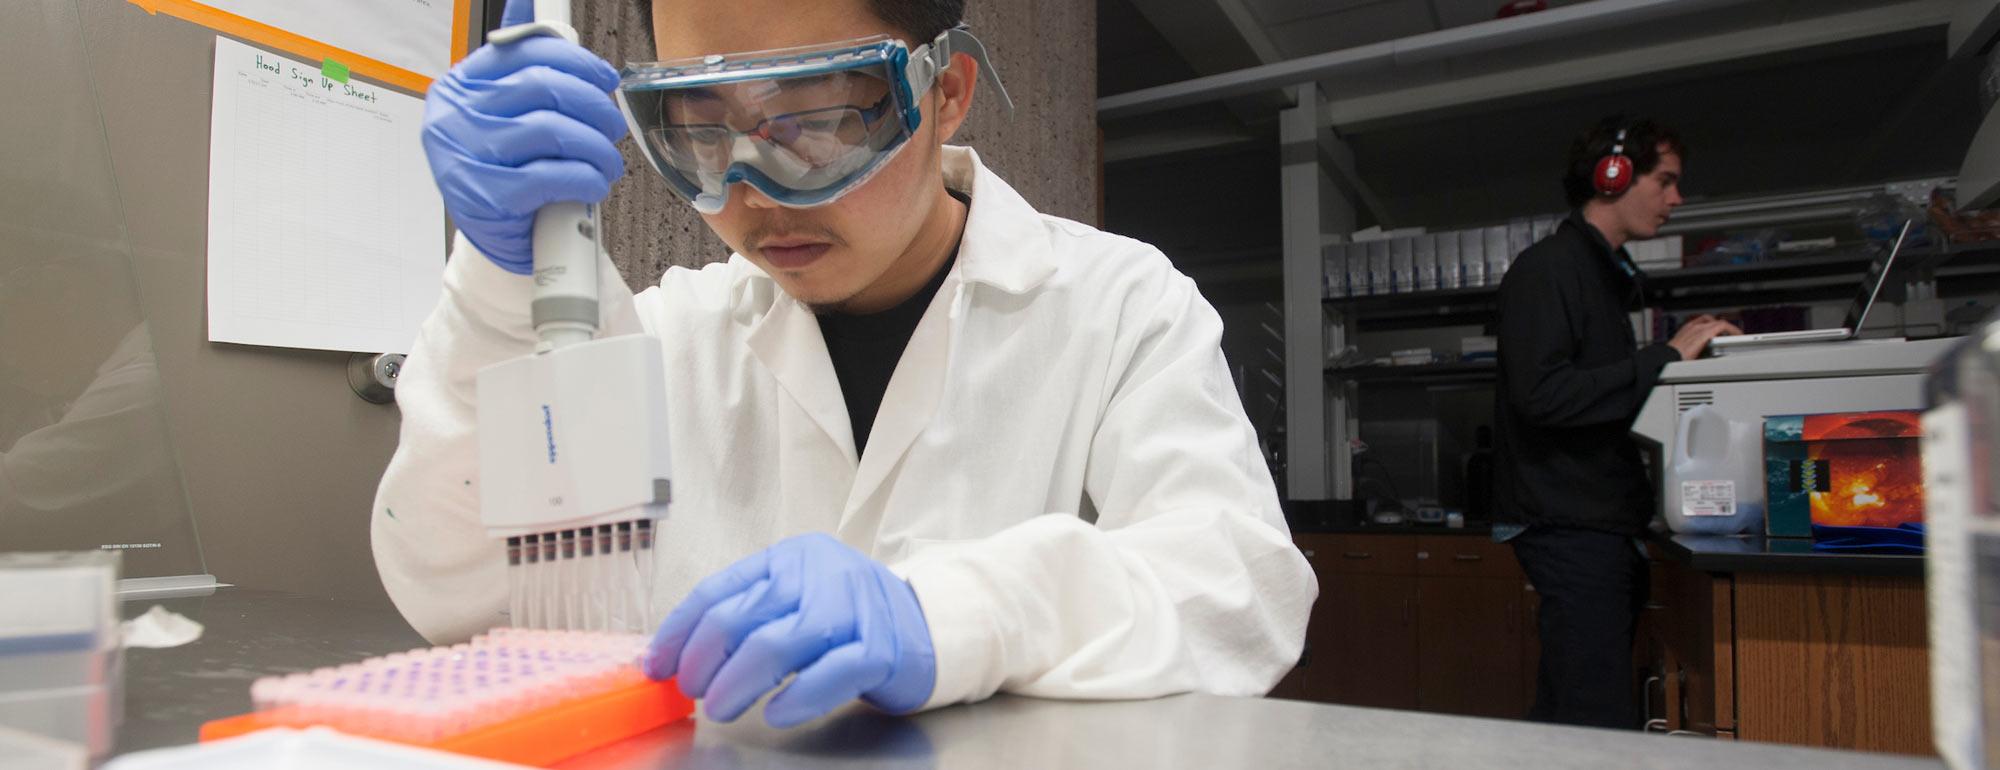 A student prepares dna samples